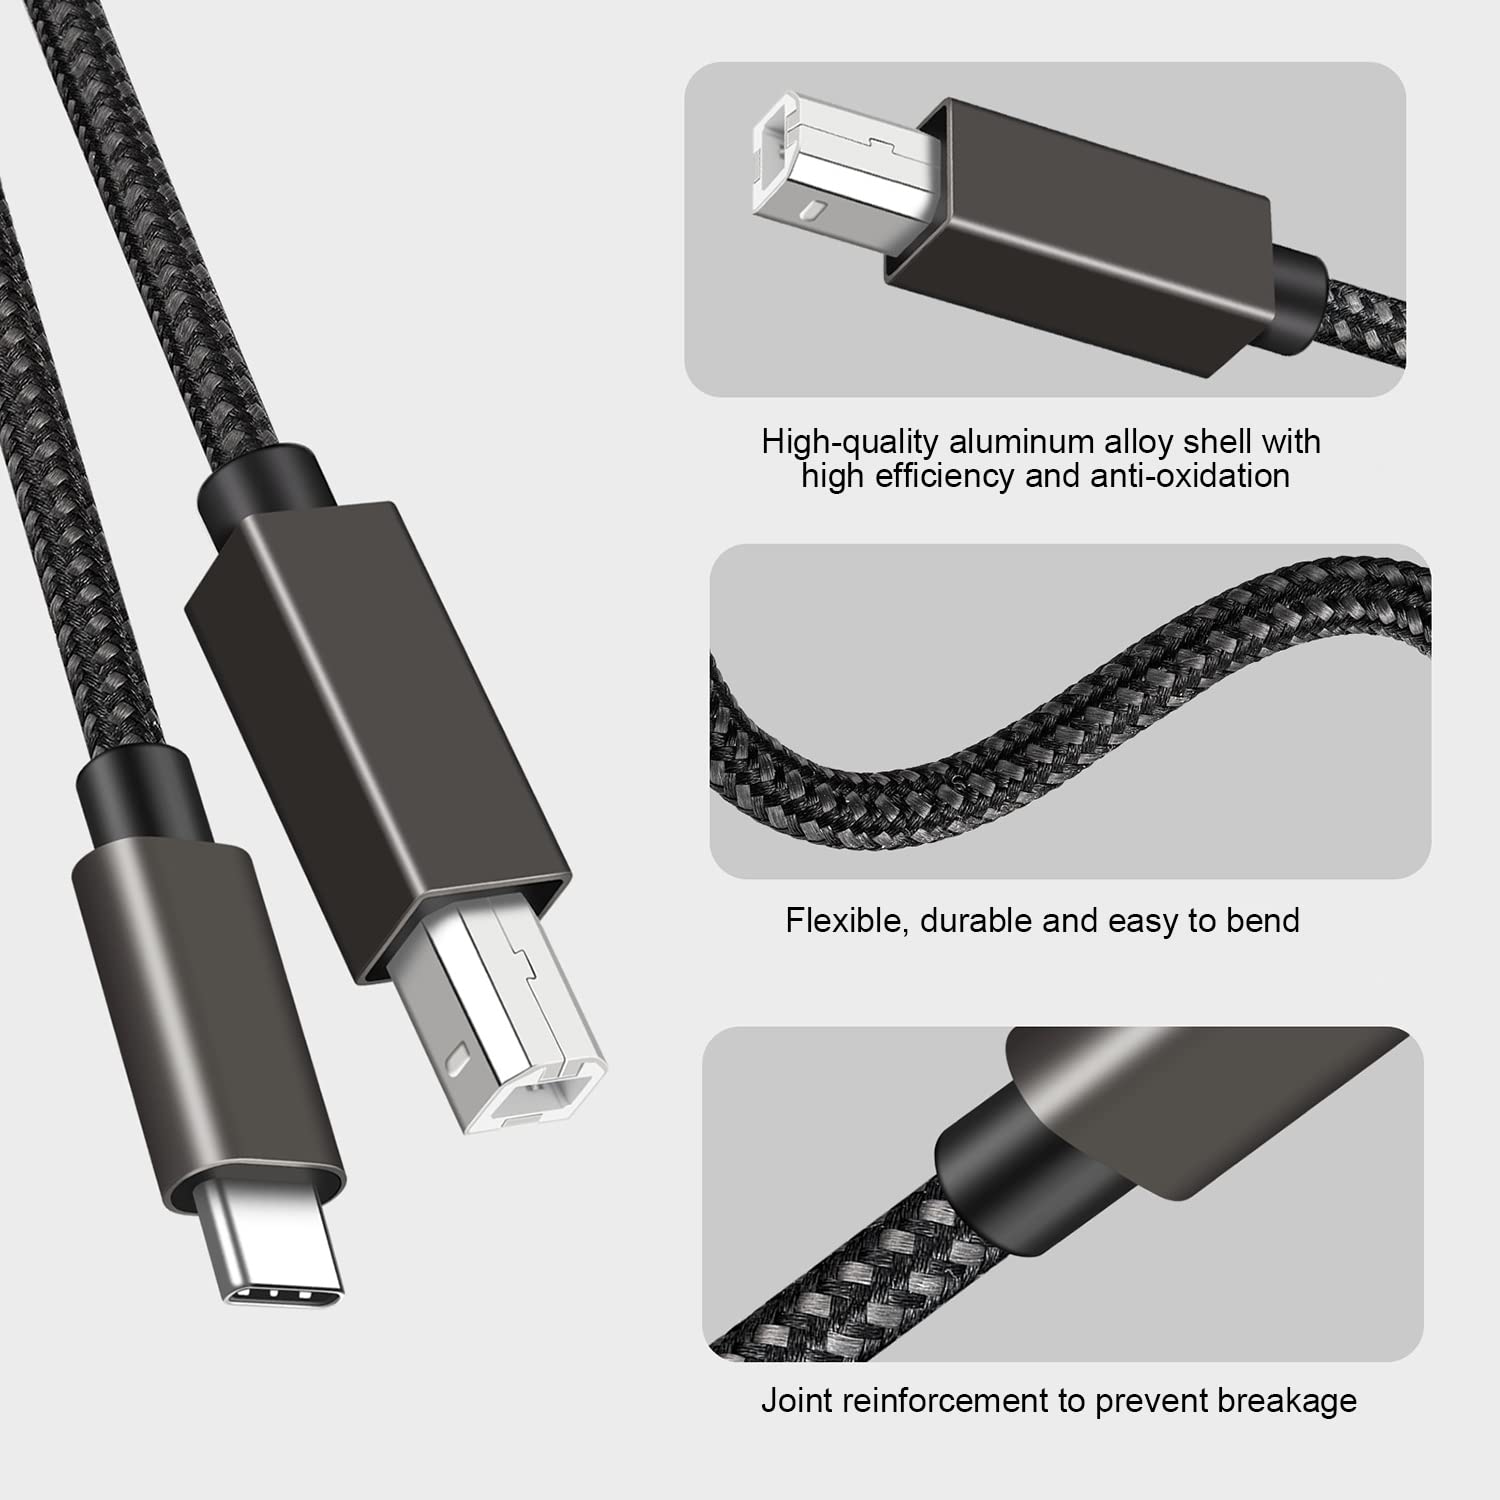 Microphone USB-C Cable - USB Male to USB-C 3.1 - Editors Keys